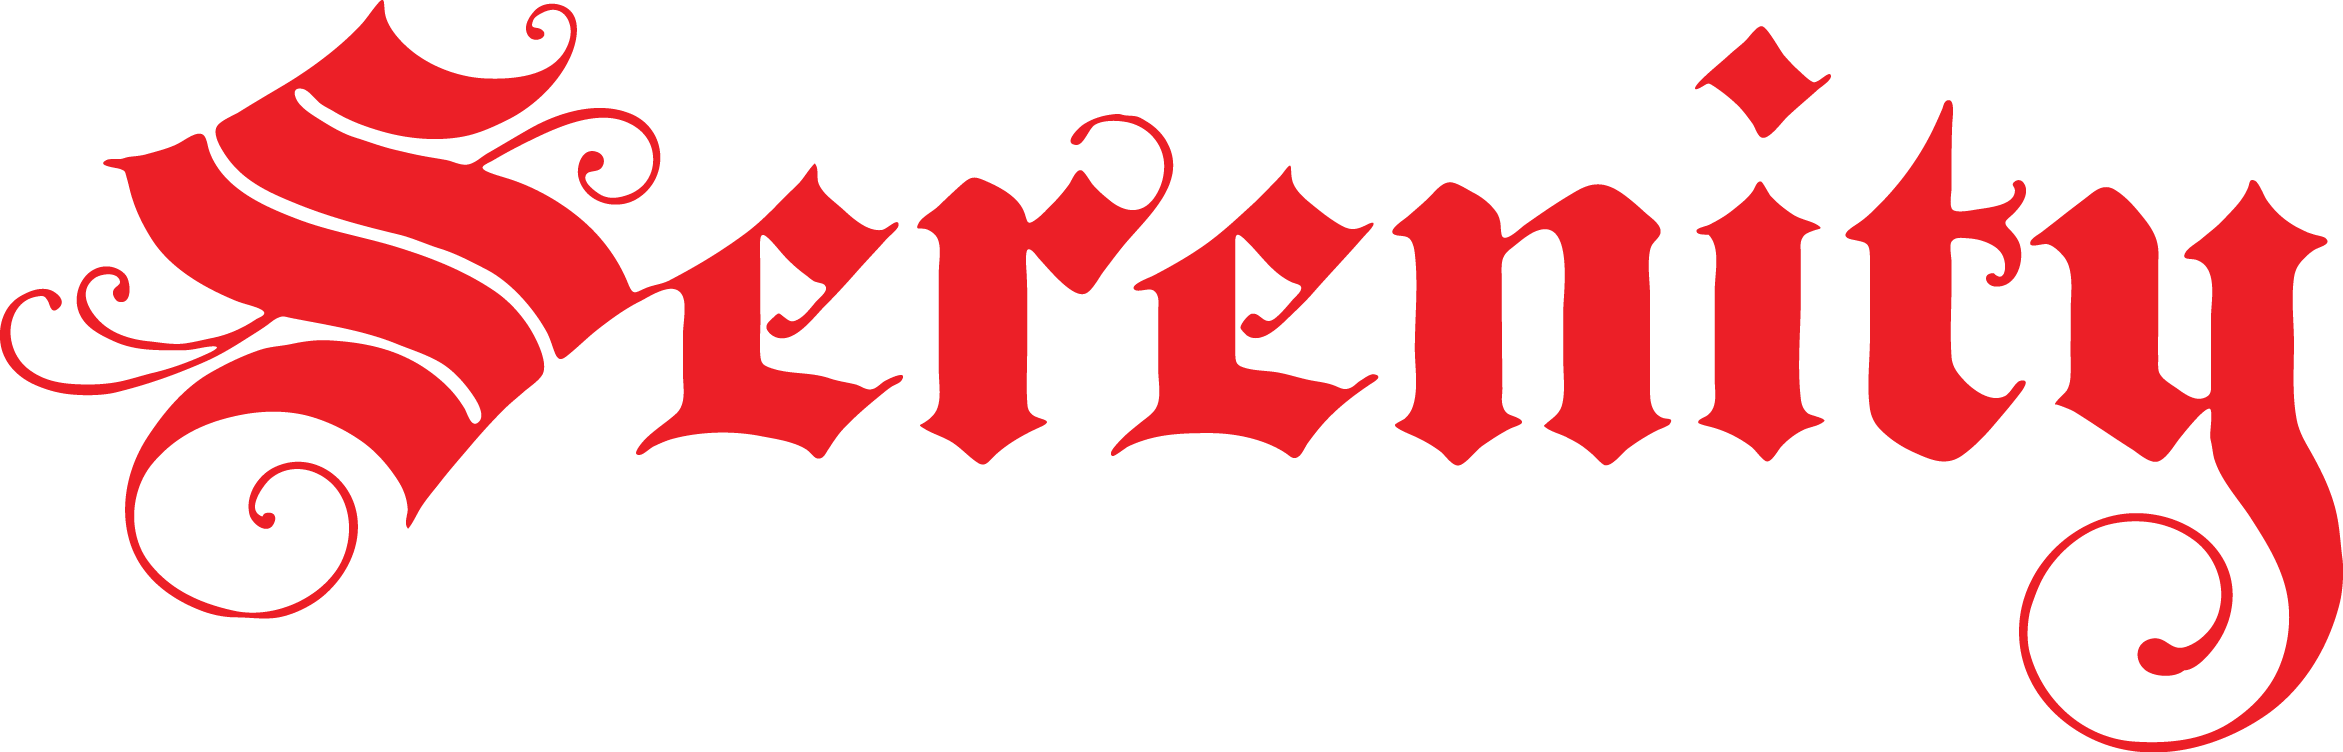 Serenity Hair Studio LLC